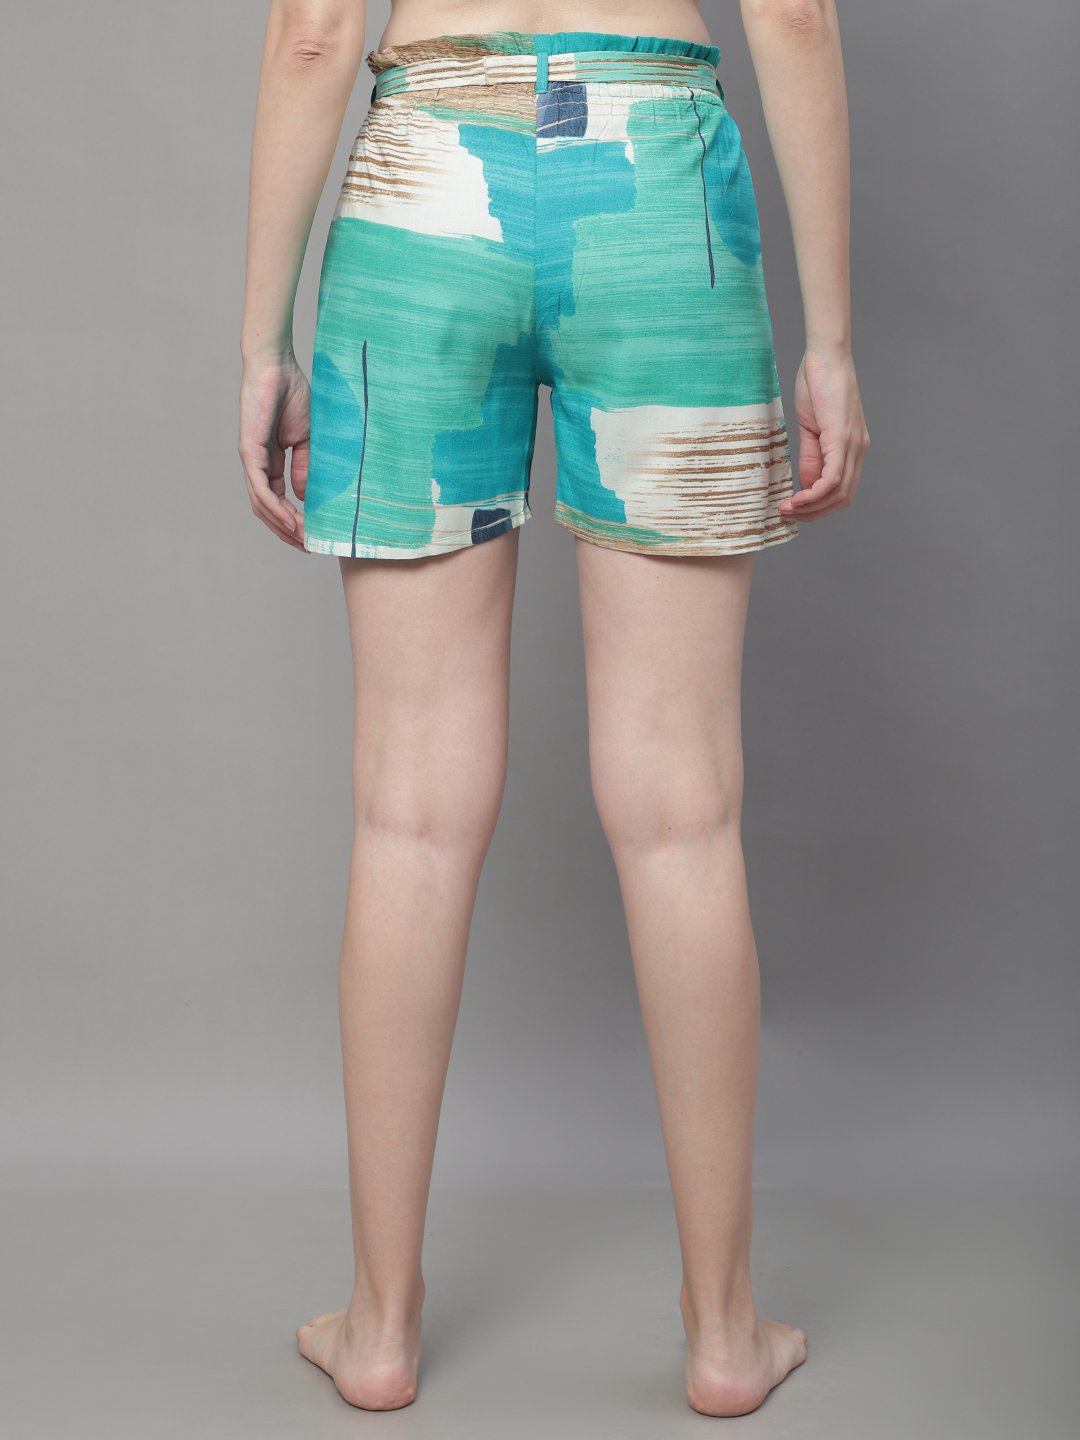 Green Color Abstract Printed Viscose Rayon Shorts For Woman Claura Designs Pvt. Ltd. Lounge Shorts Abstract, Green, Lounge Short, Loungeshort_size, Printed, Rayon, Shorts